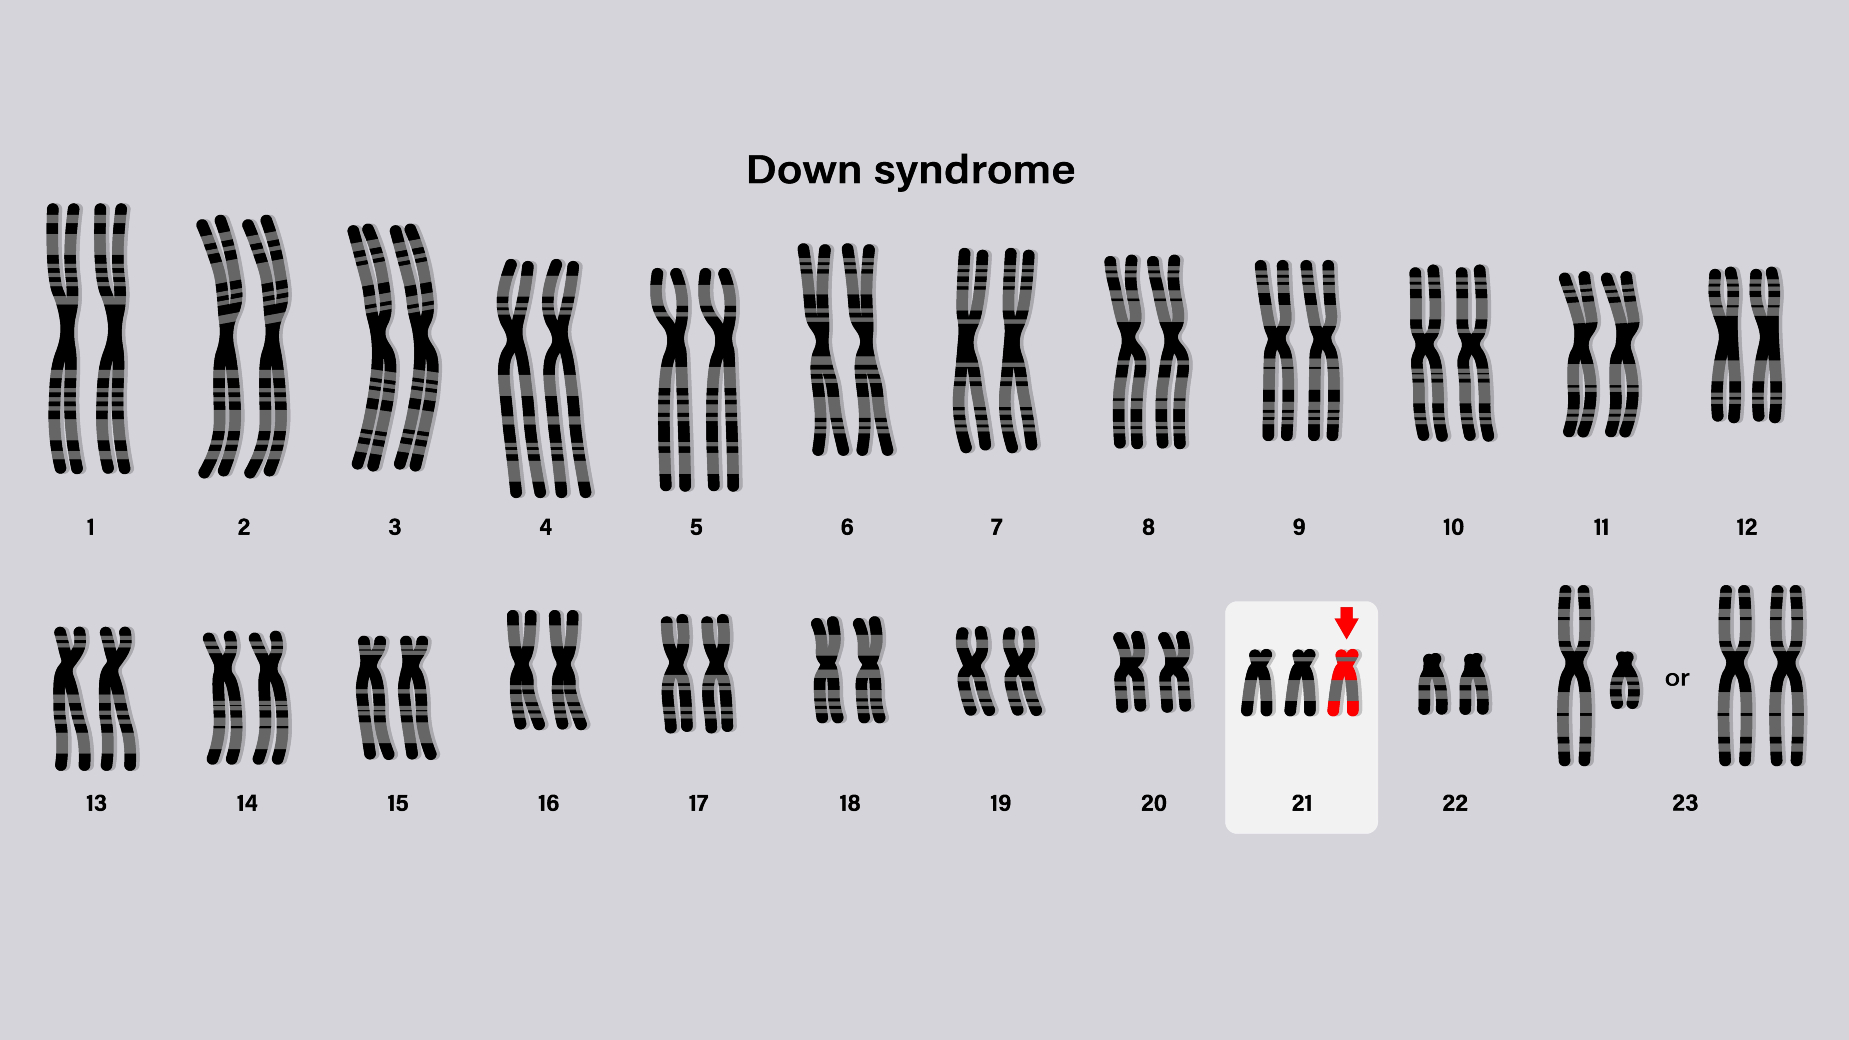 Trisomy in chromosome 21